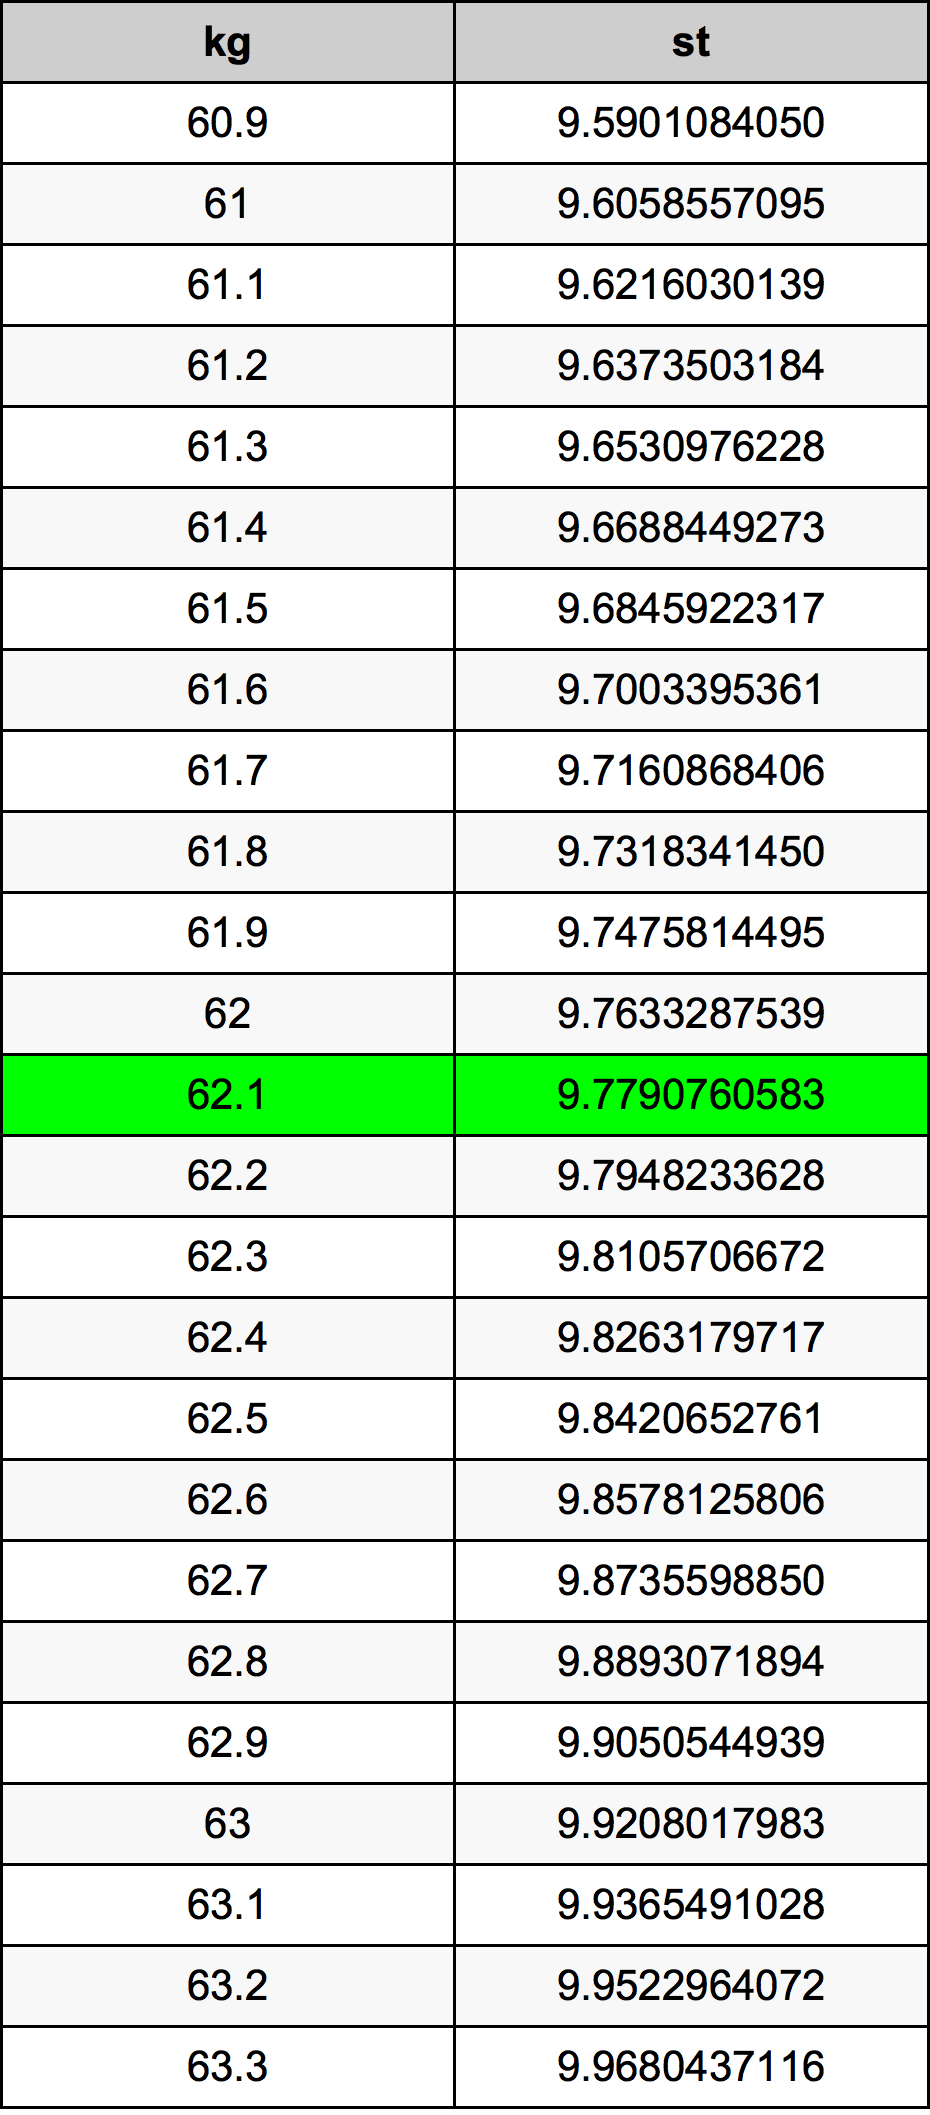 62.1 Kilogramma konverżjoni tabella